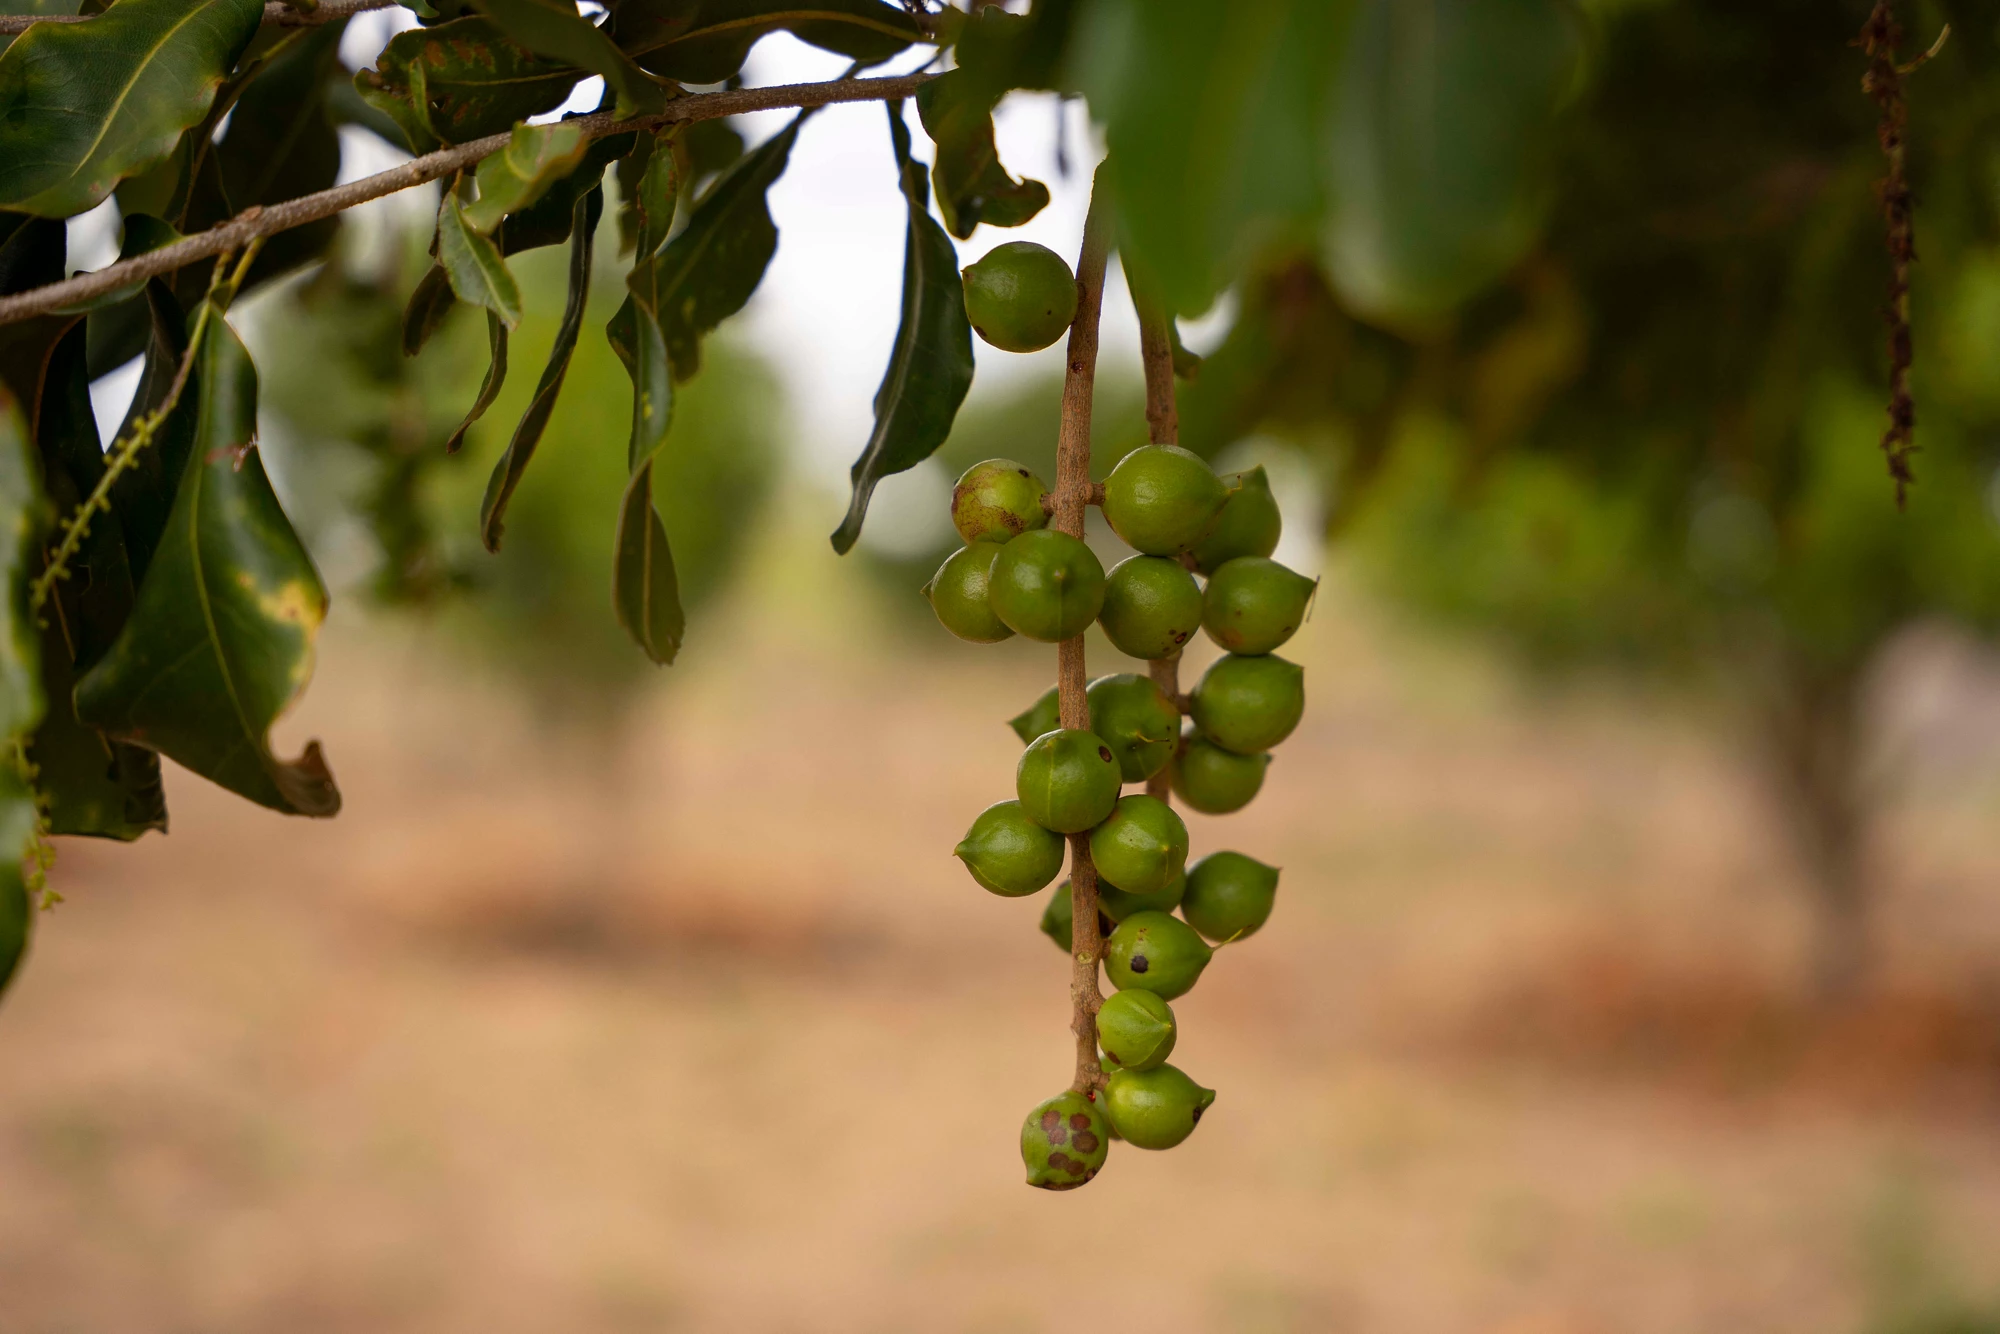 Macadamia nuts in Malawi